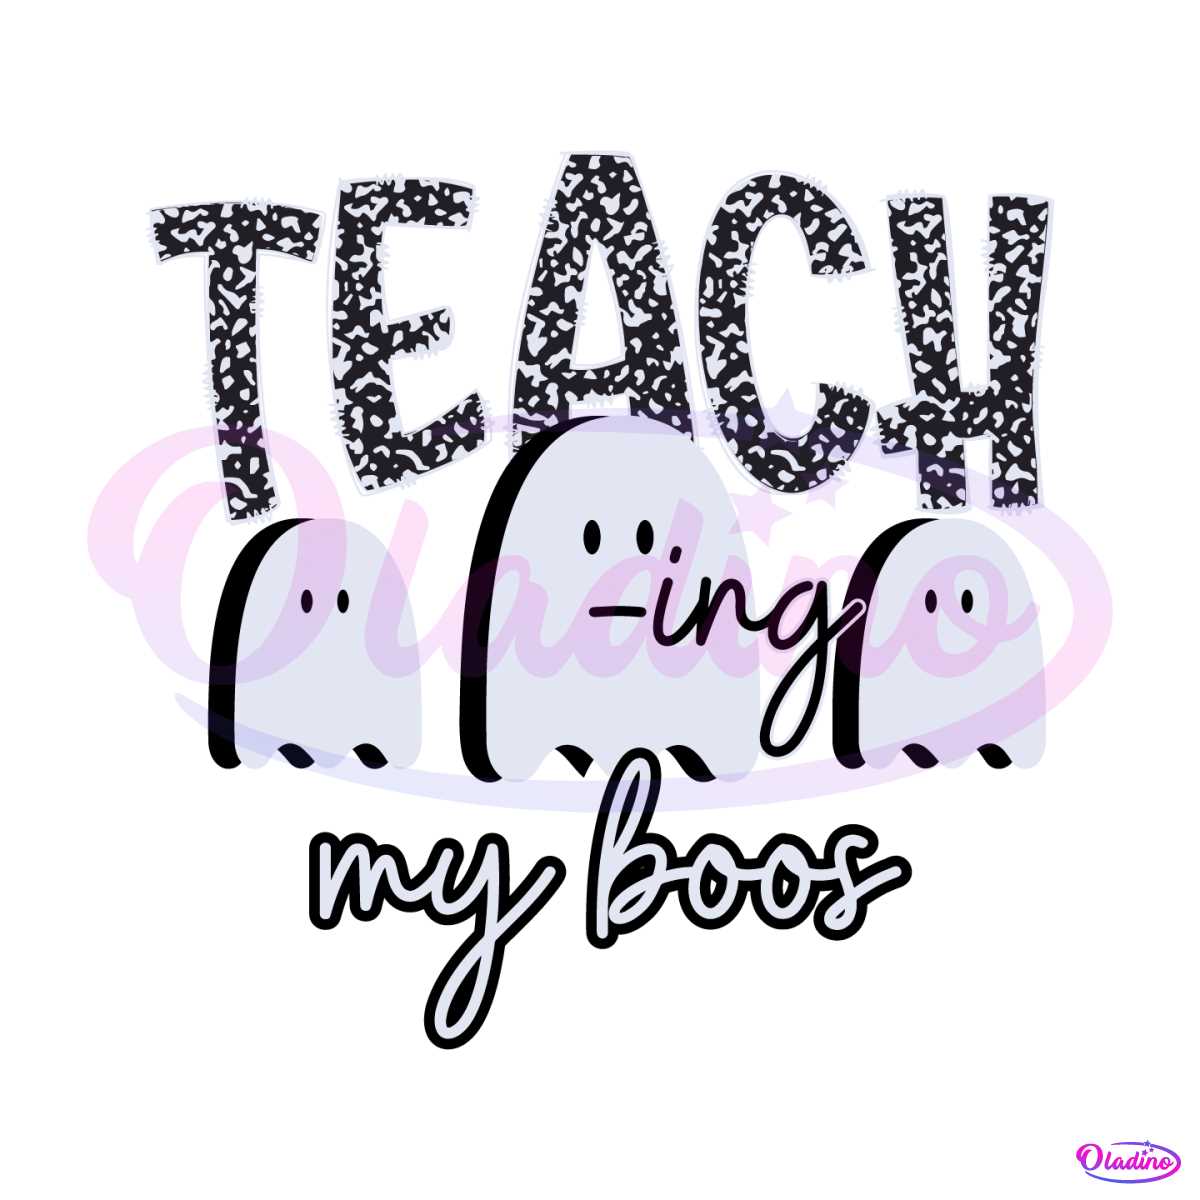 halloween-teacher-teaching-my-boos-svg-file-for-cricut